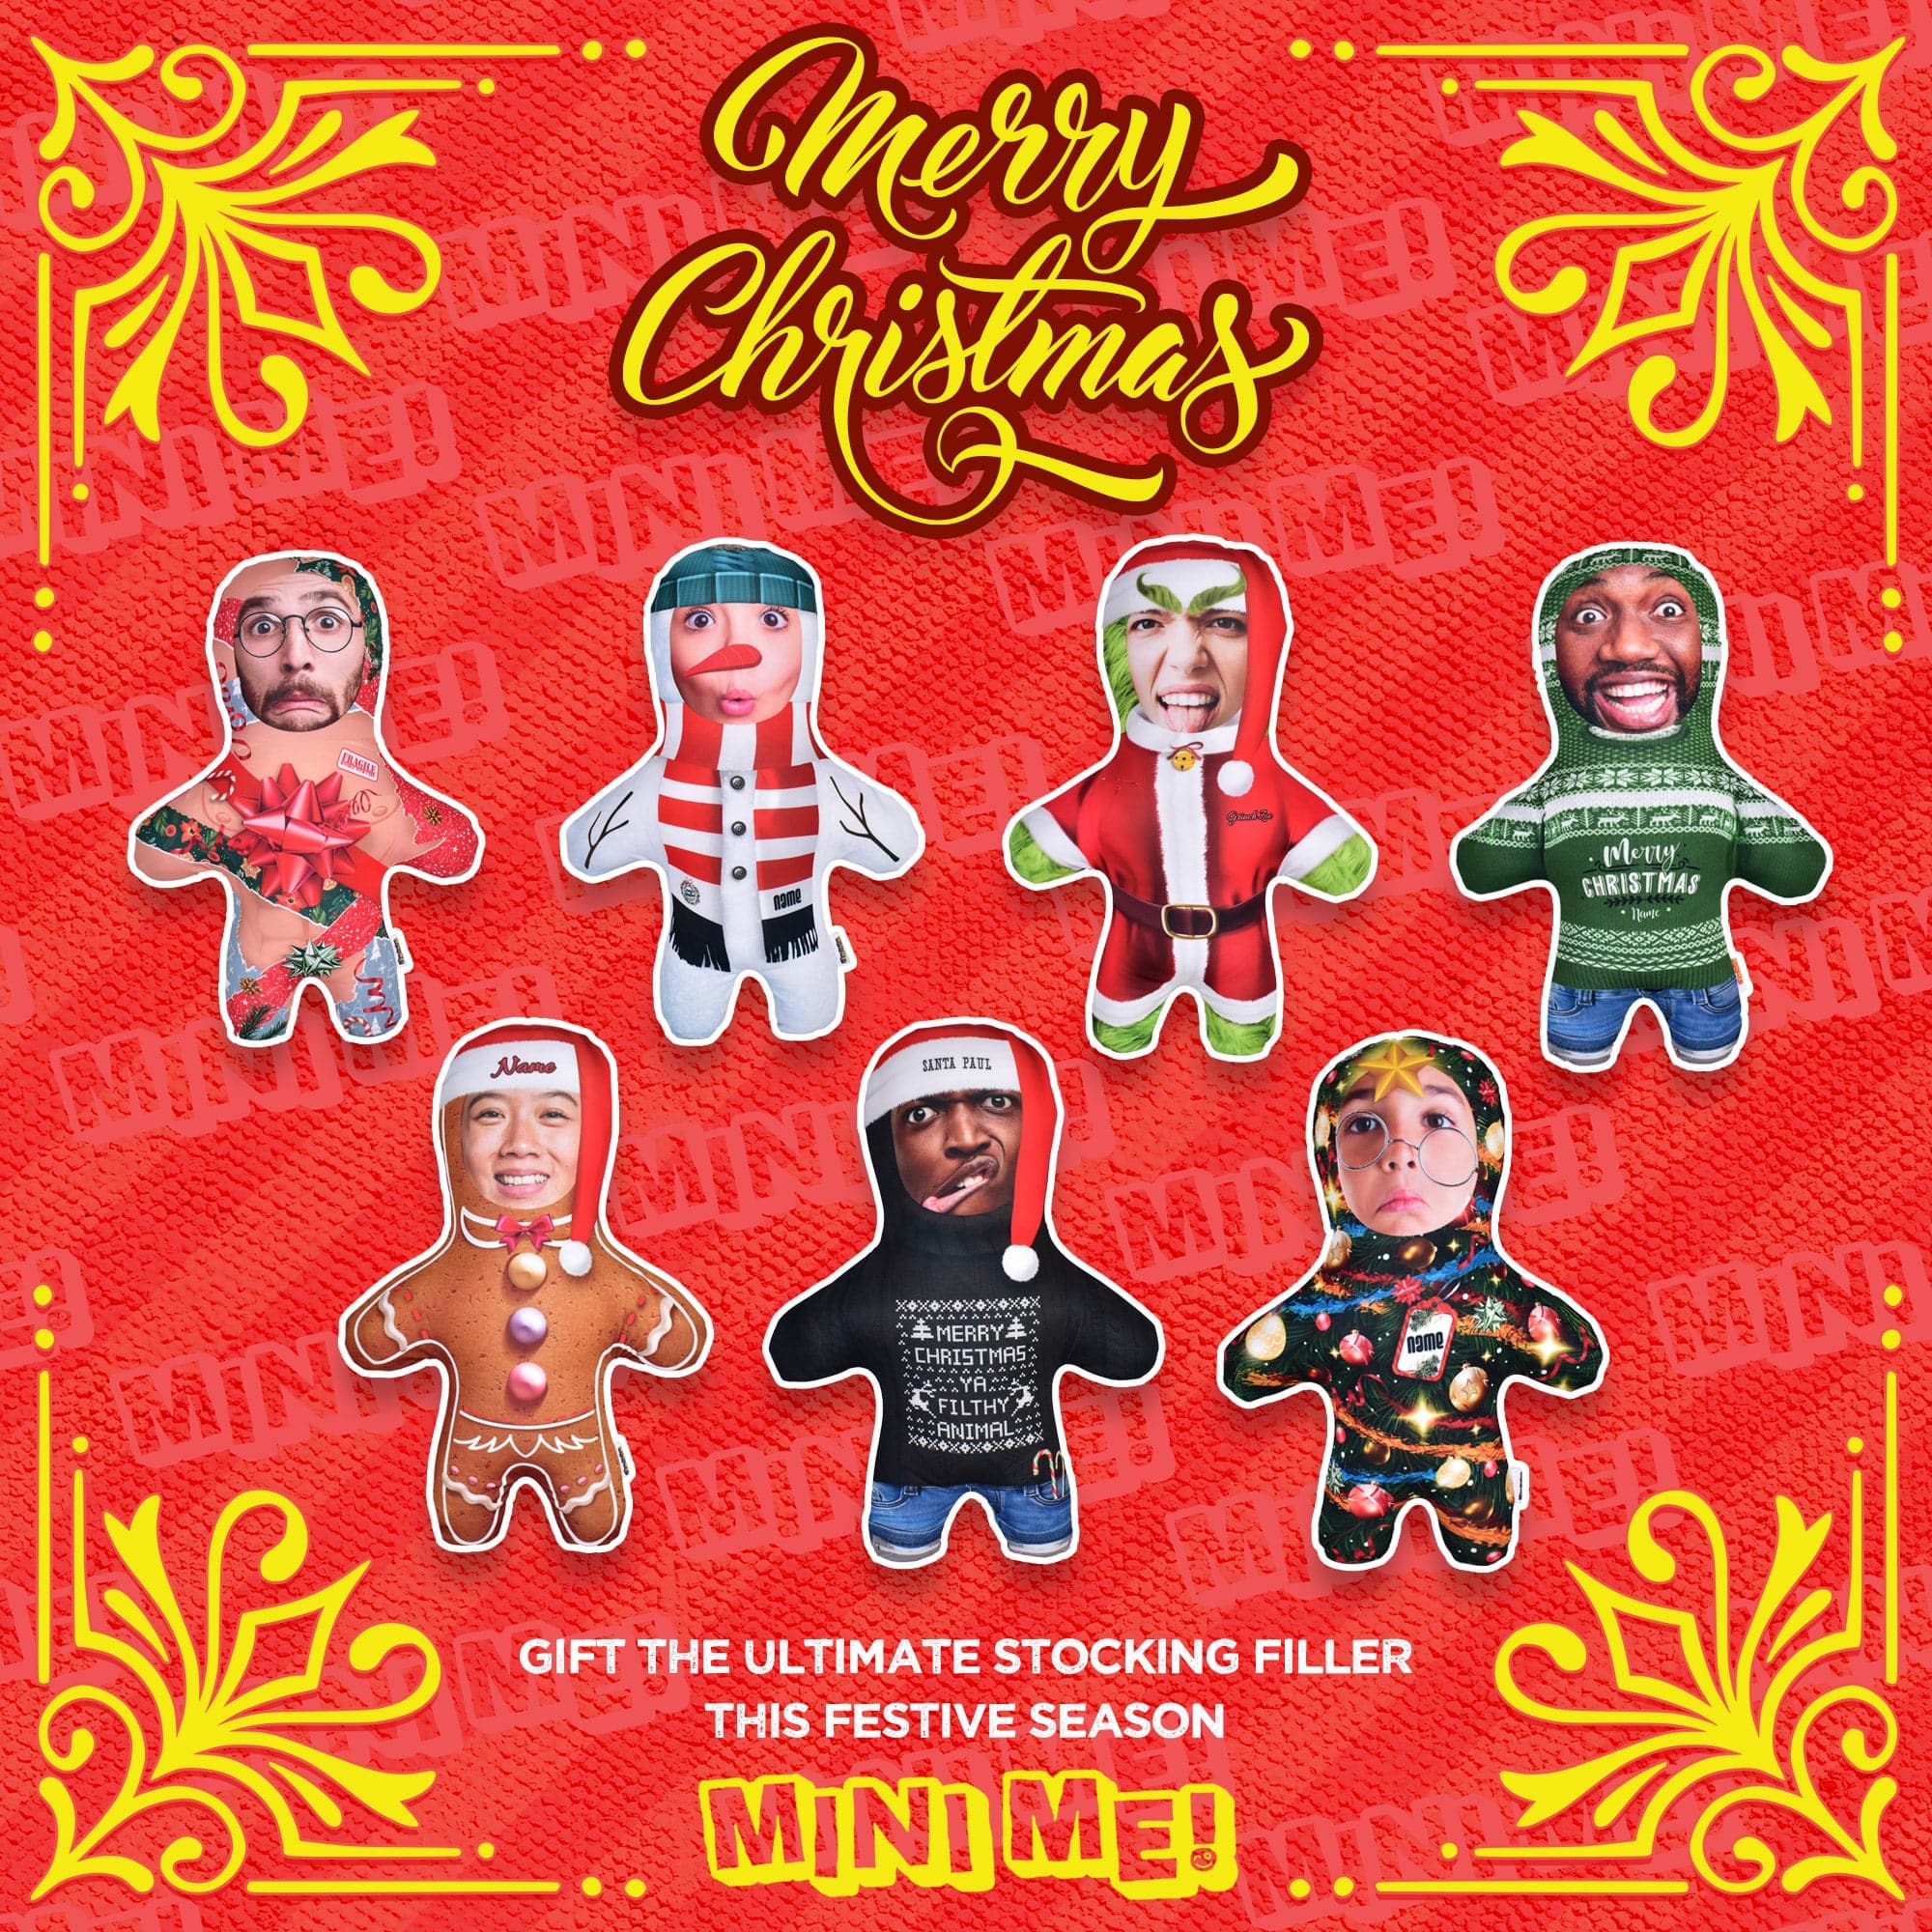 Christmas Tree Jumper - Two Variants - Personalised Mini Me Doll